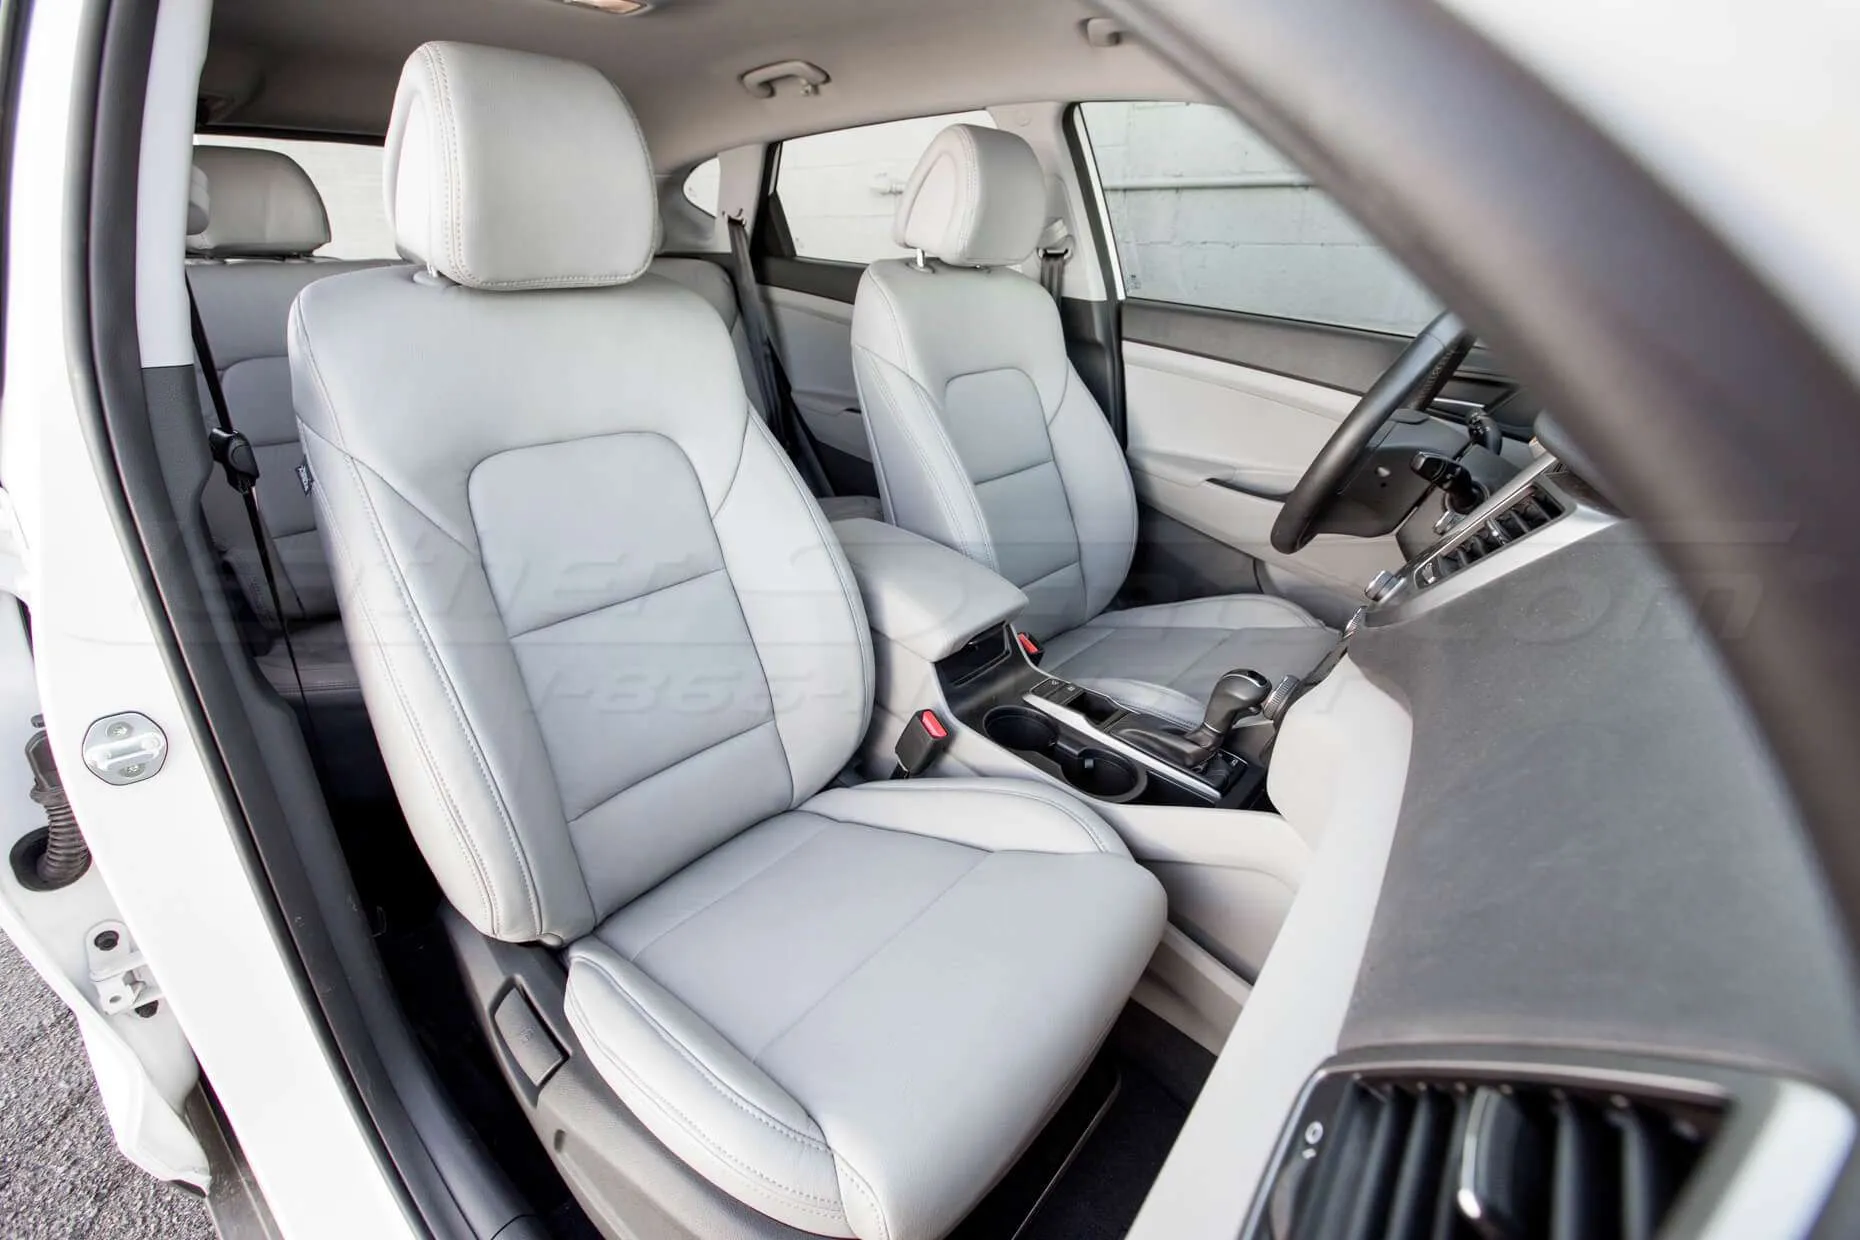 Honda Tucson Installed Leather Seats - Ash - Full front interior